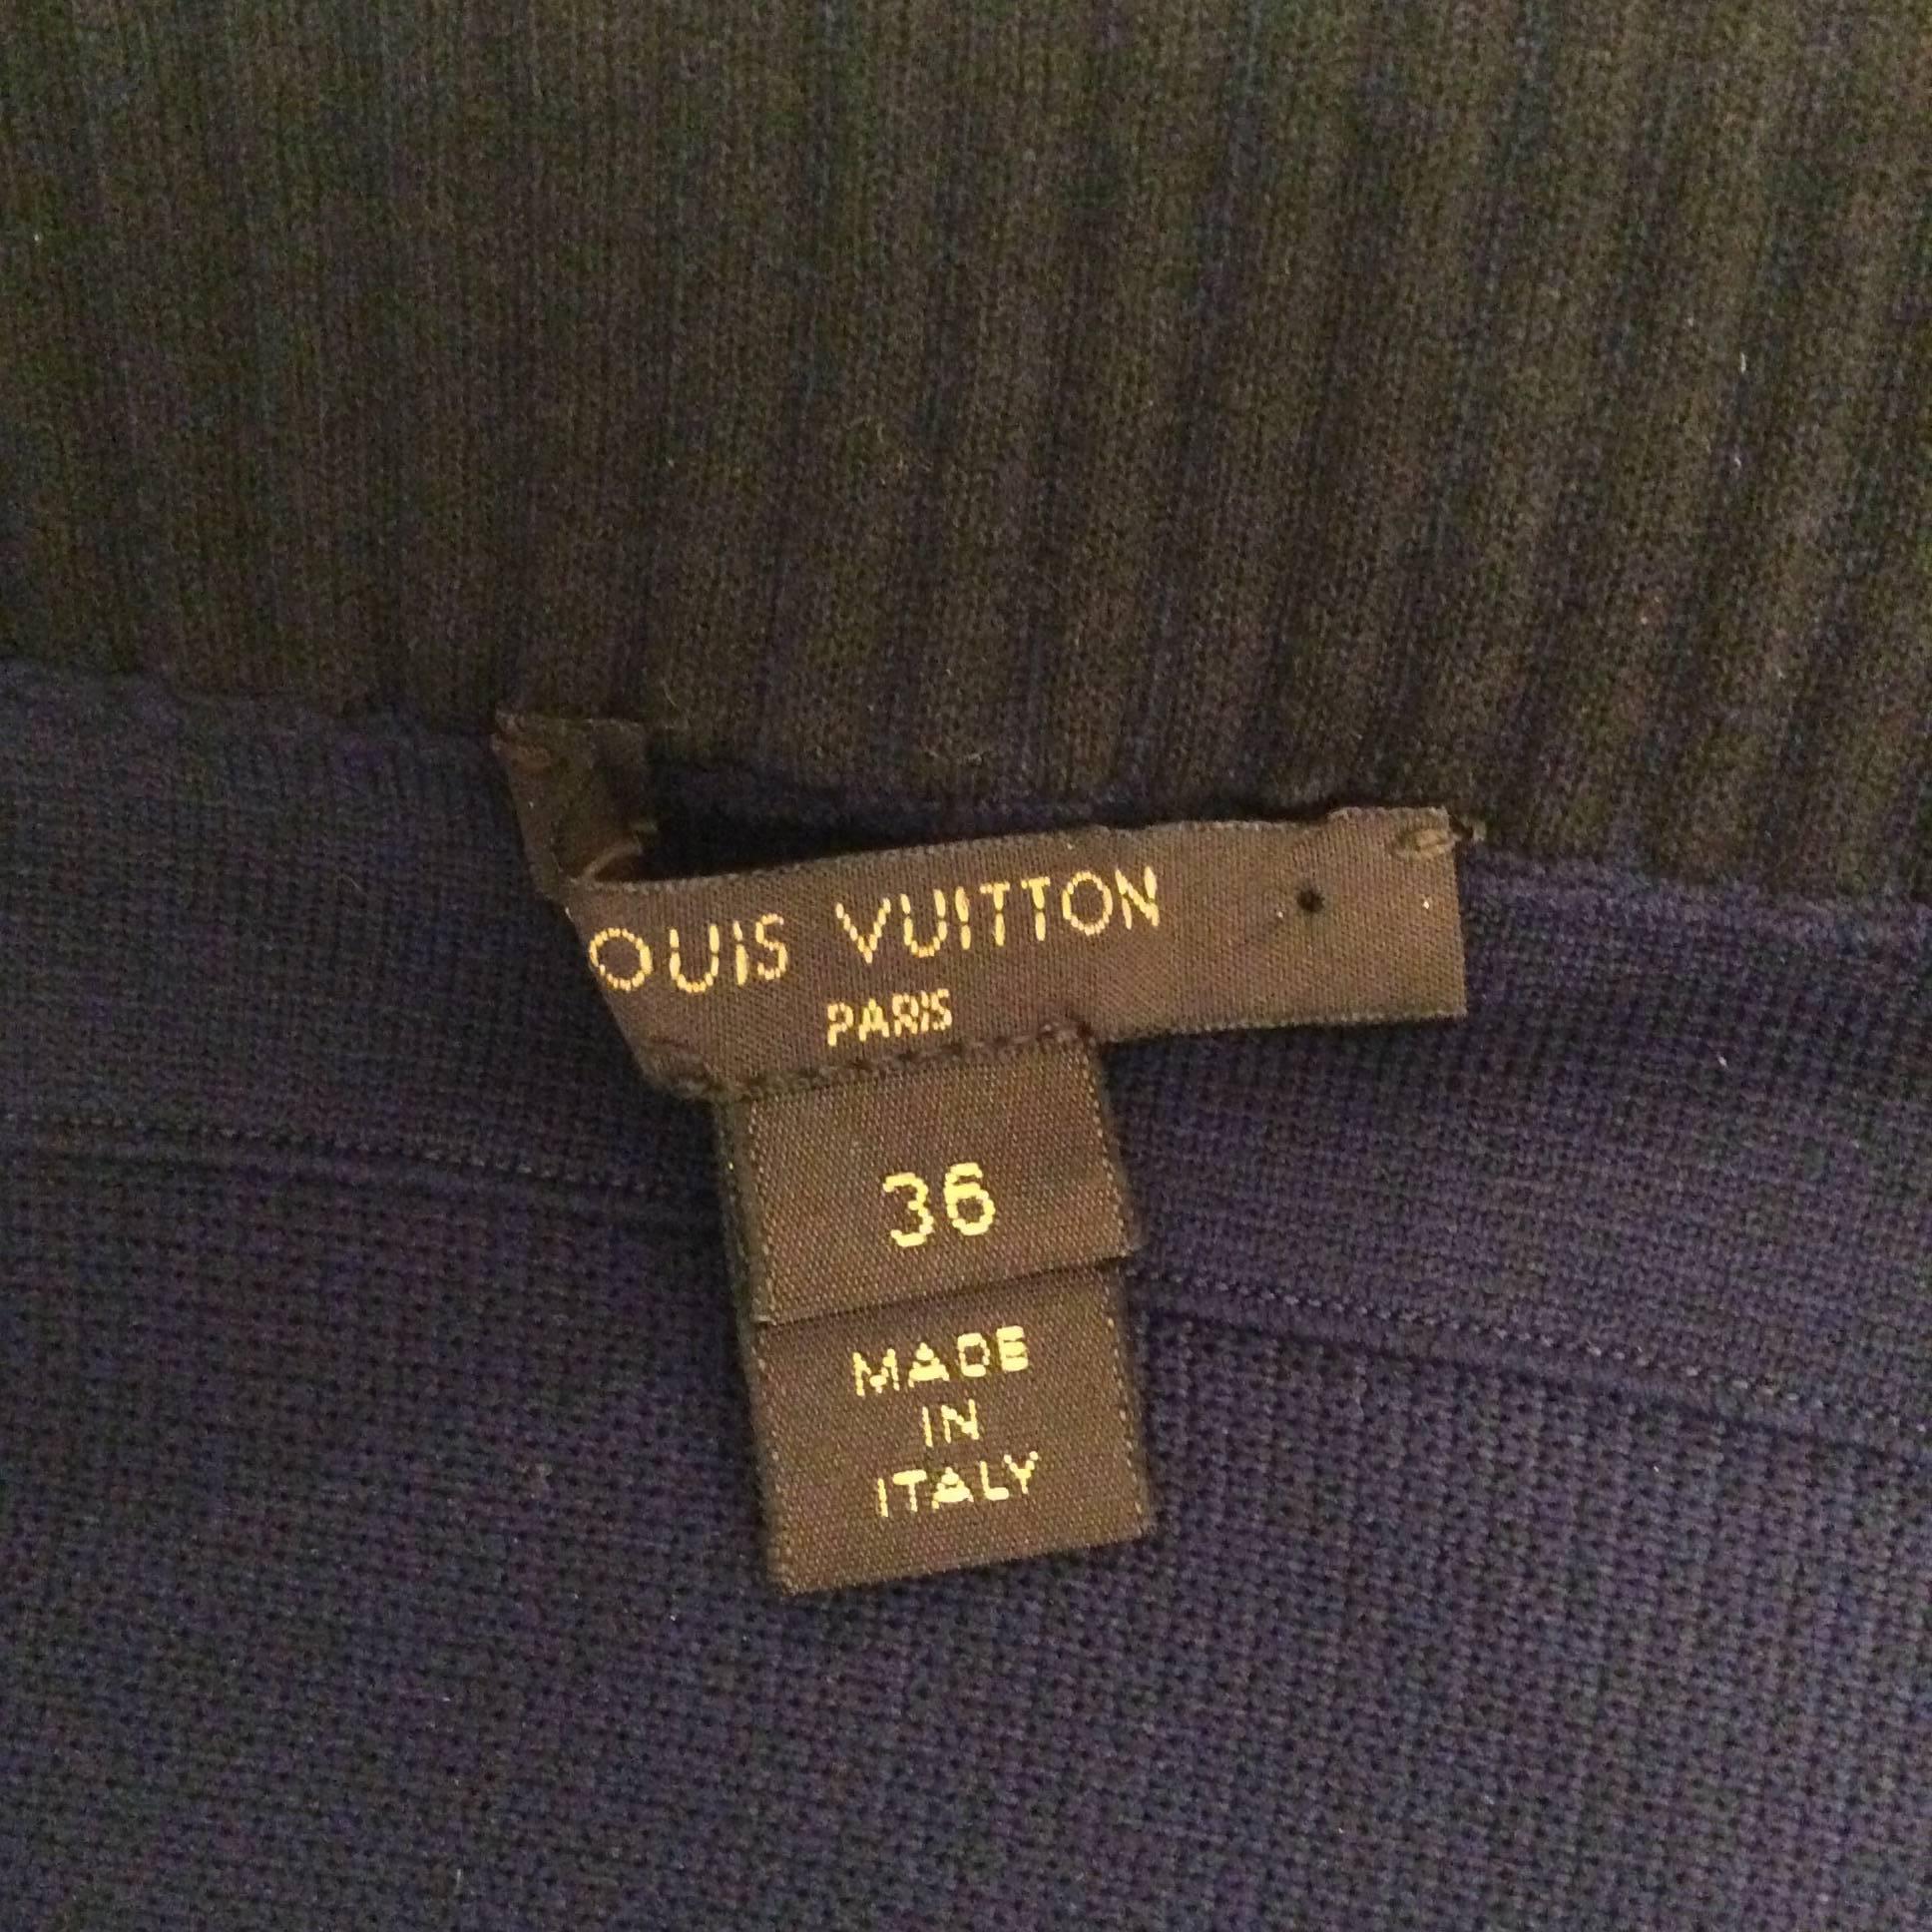 Women's Louis Vuitton Teal Brown And Navy Coat Dress Sz 36 (Us 4)